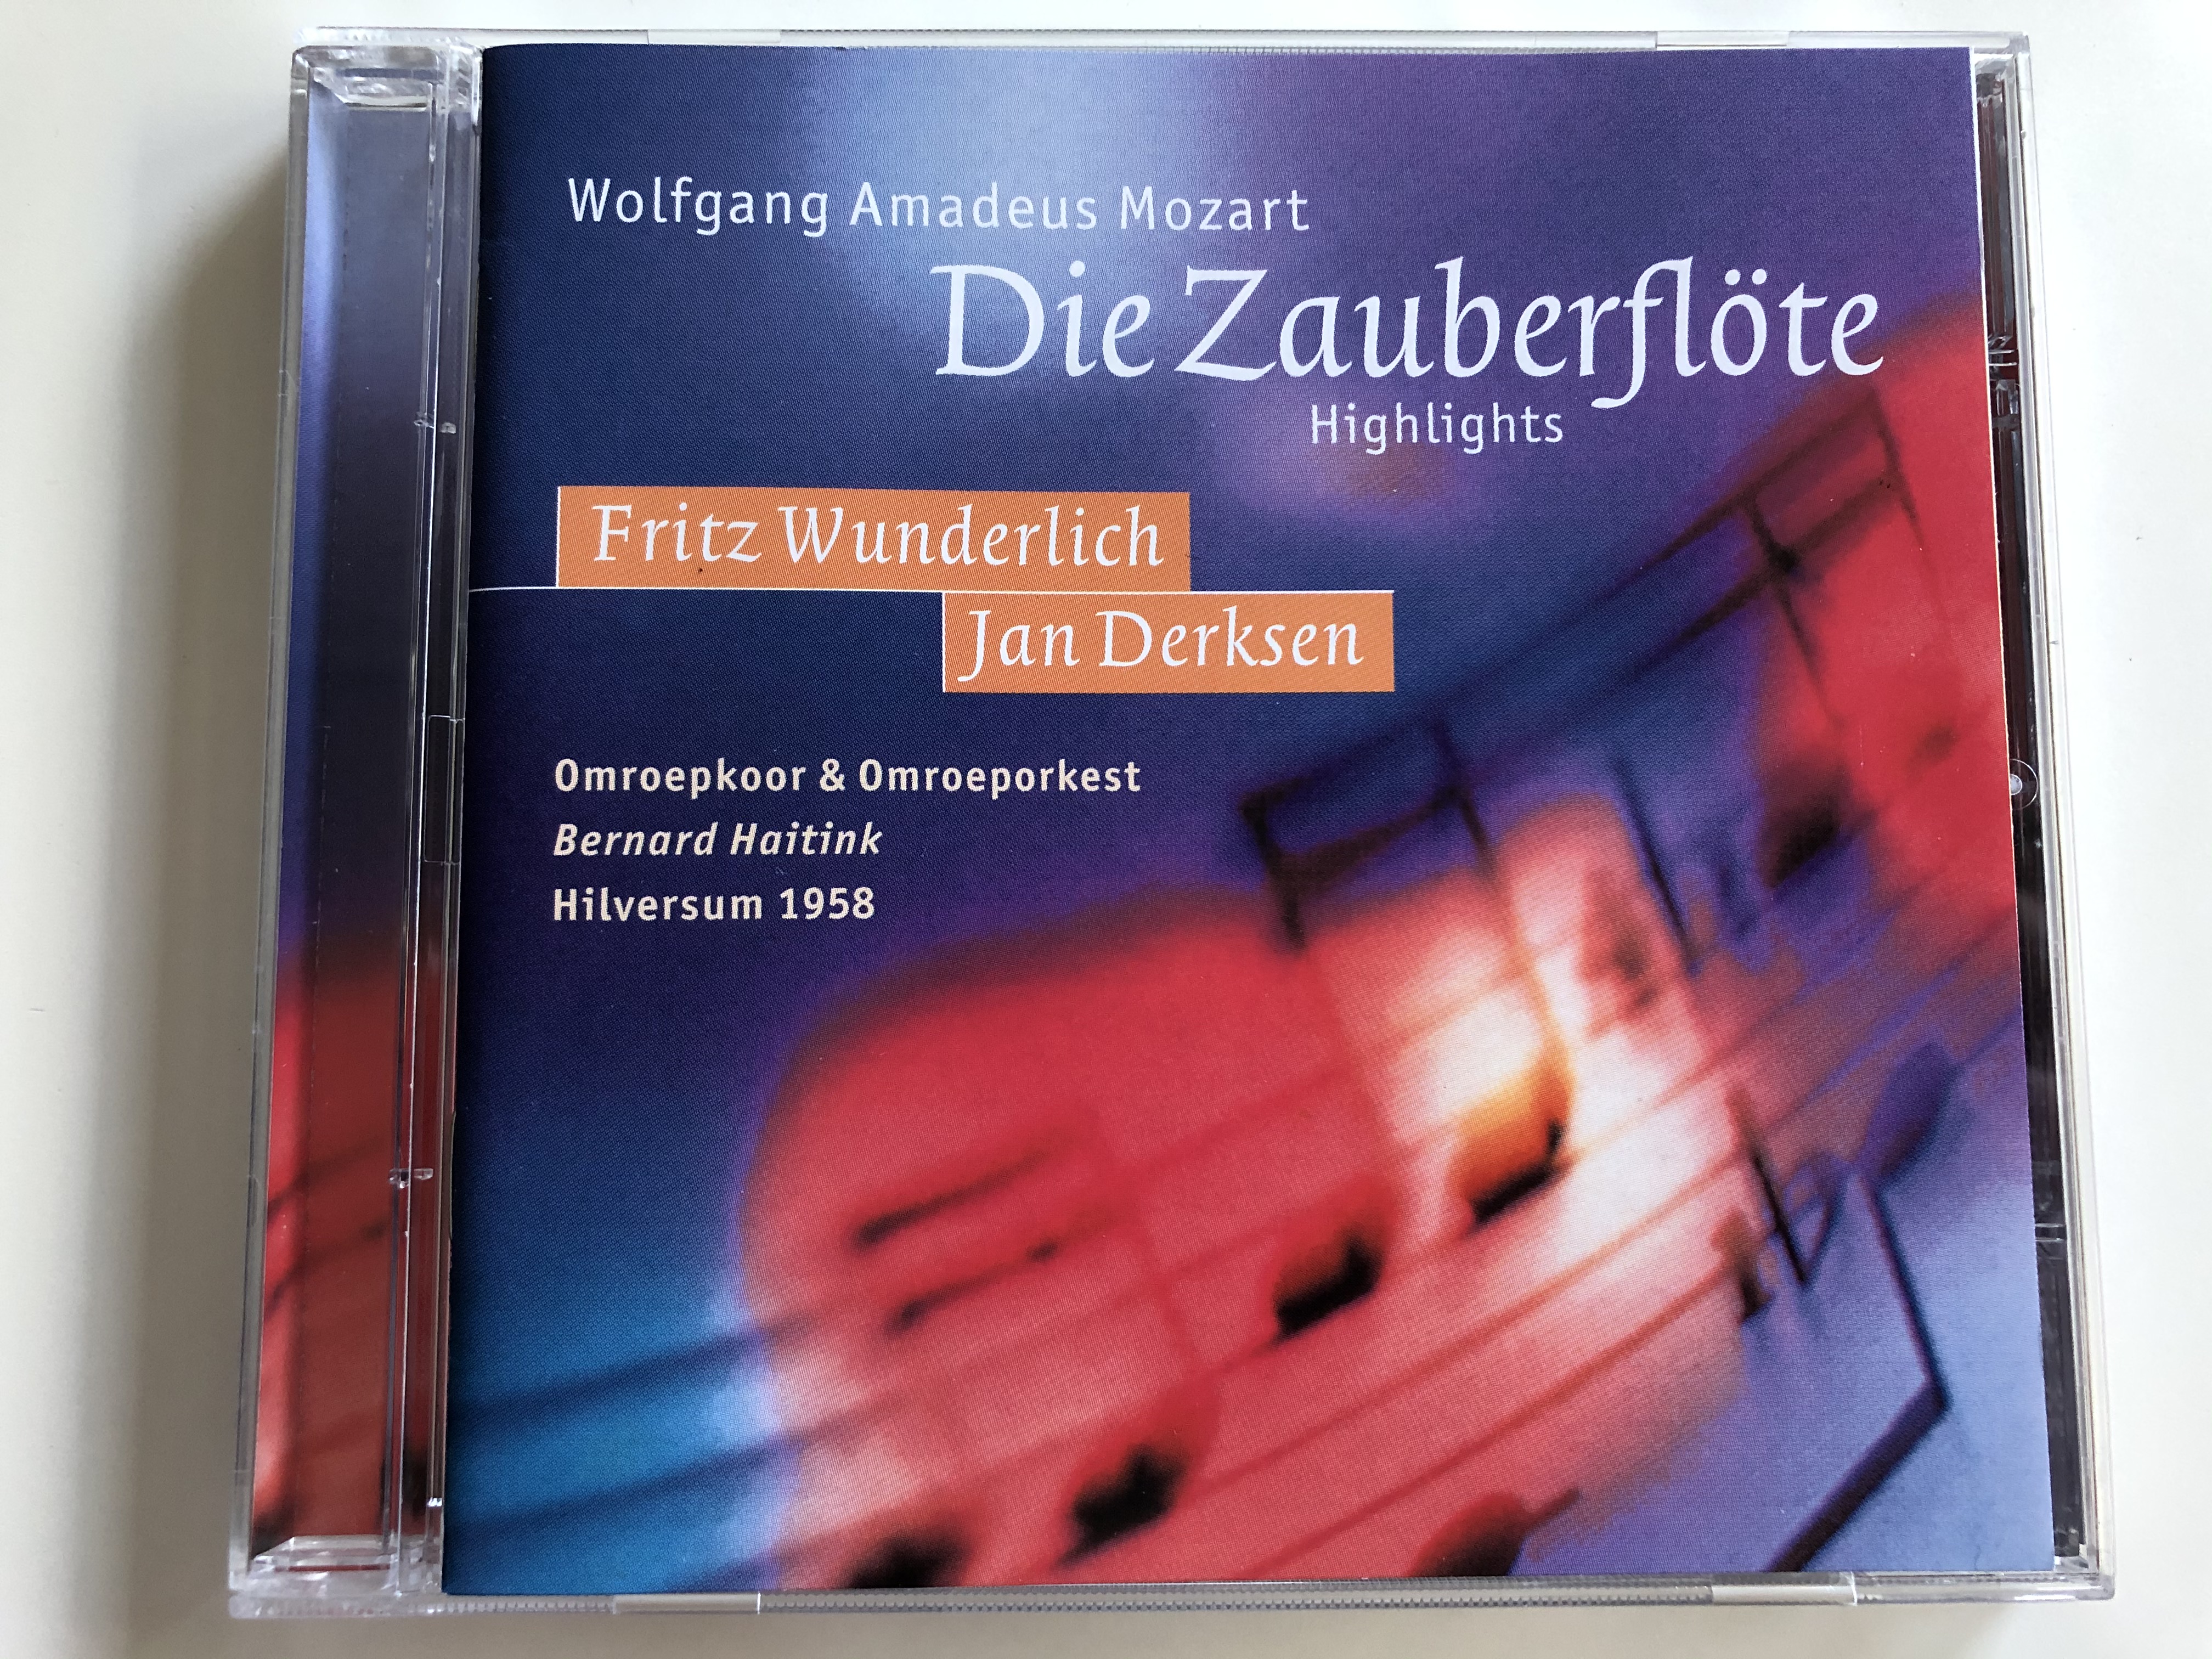 wolfgang-amadeus-mozart-die-zauberflote-highlights-fritz-wunderlich-jan-derksen-omroepkoor-omroeporkest-bernard-haitink-hilversum-1958-hilversum-audio-cd-1958-glh-812-1-.jpg